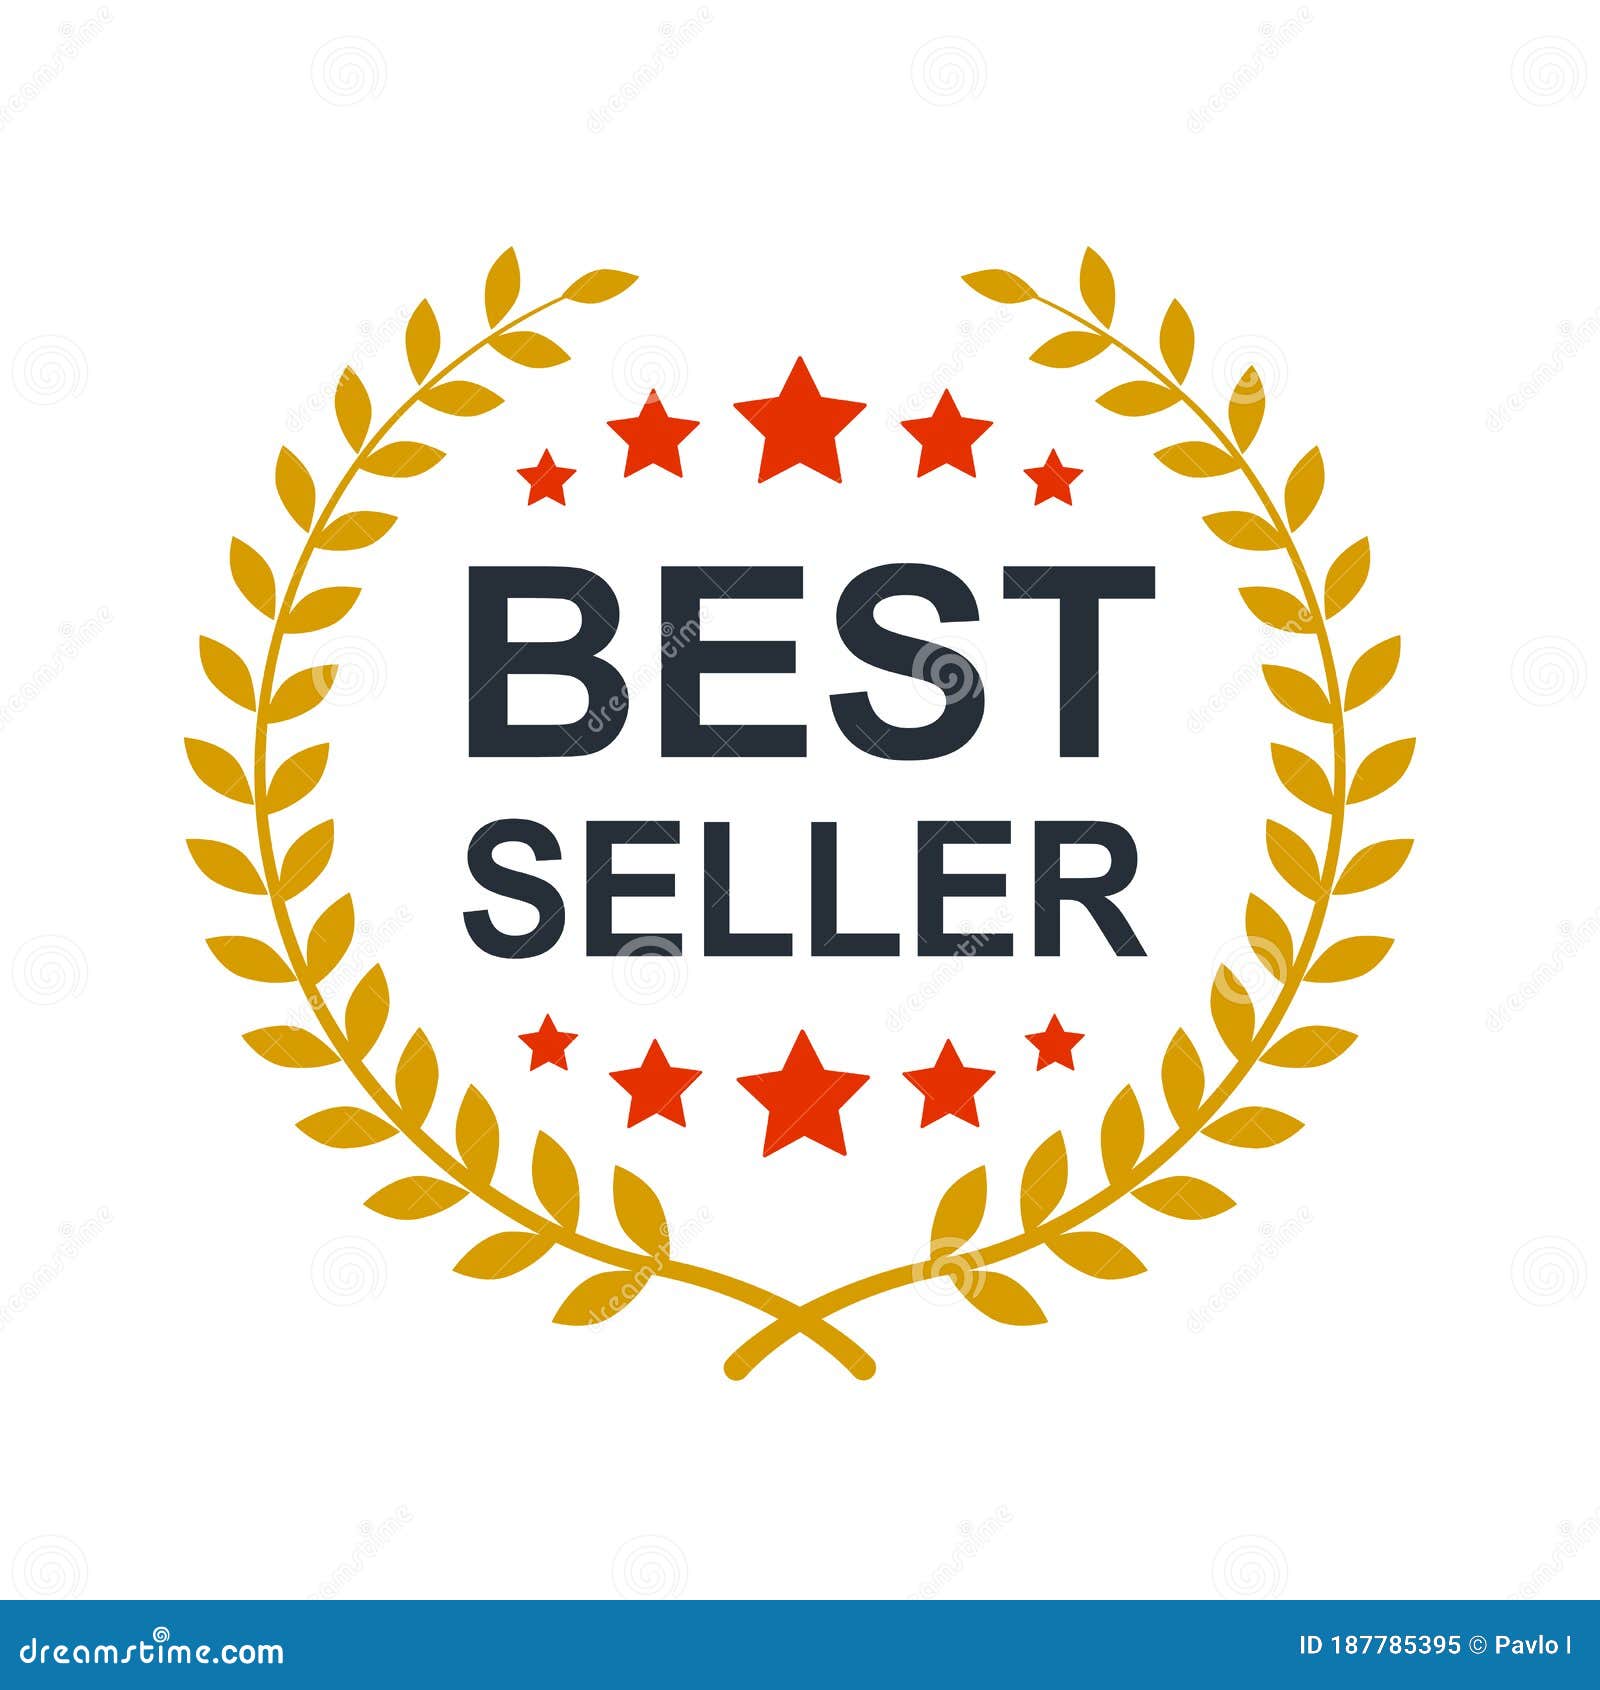 https://thumbs.dreamstime.com/z/best-seller-icon-design-laurel-badge-logo-isolated-stock-vector-187785395.jpg